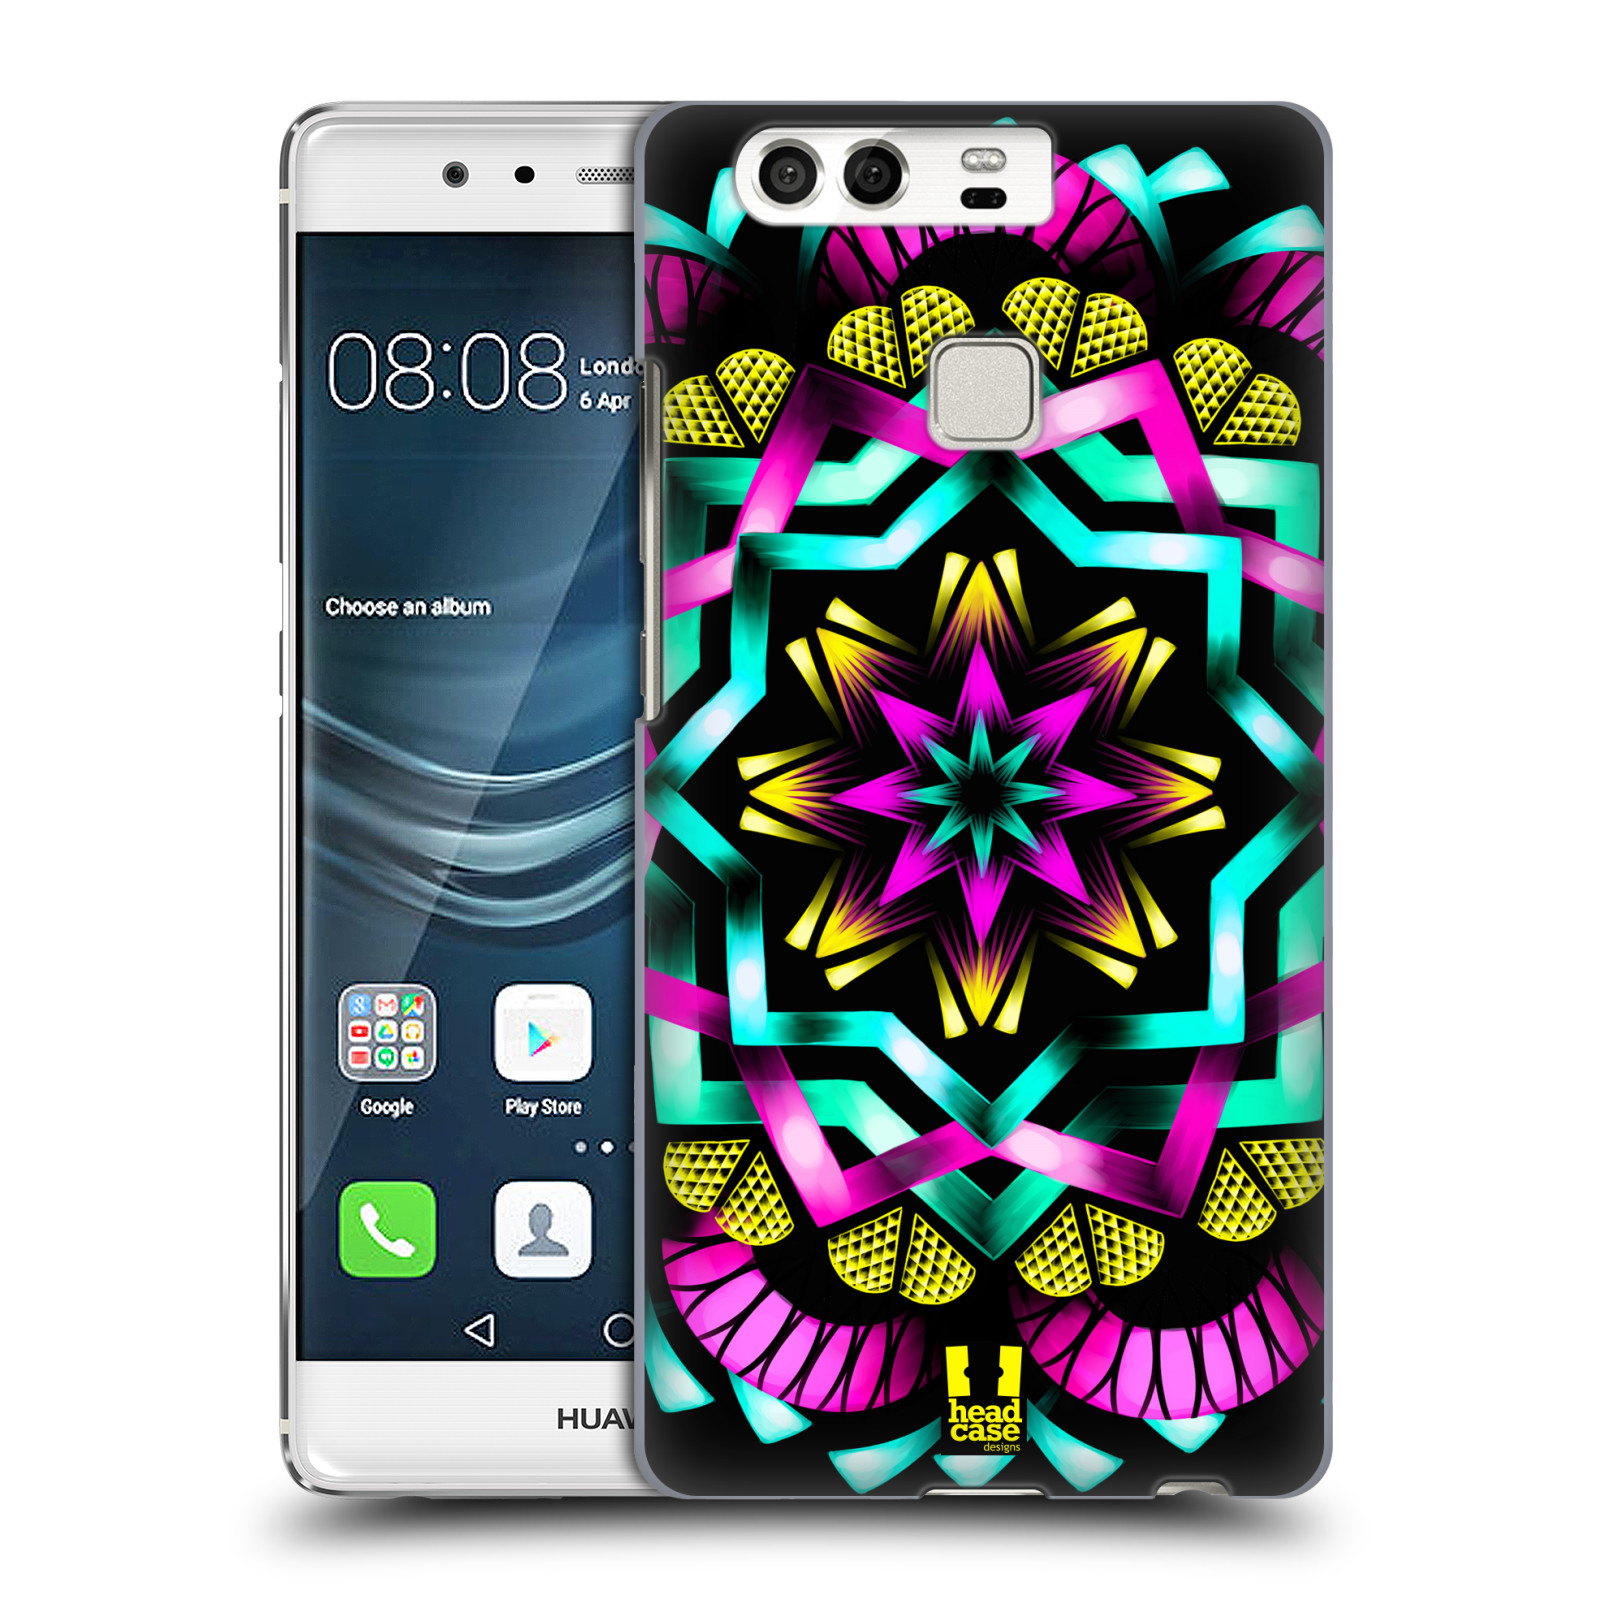 HEAD CASE plastový obal na mobil Huawei P9 / P9 DUAL SIM vzor Indie Mandala kaleidoskop barevný vzor SLUNCE